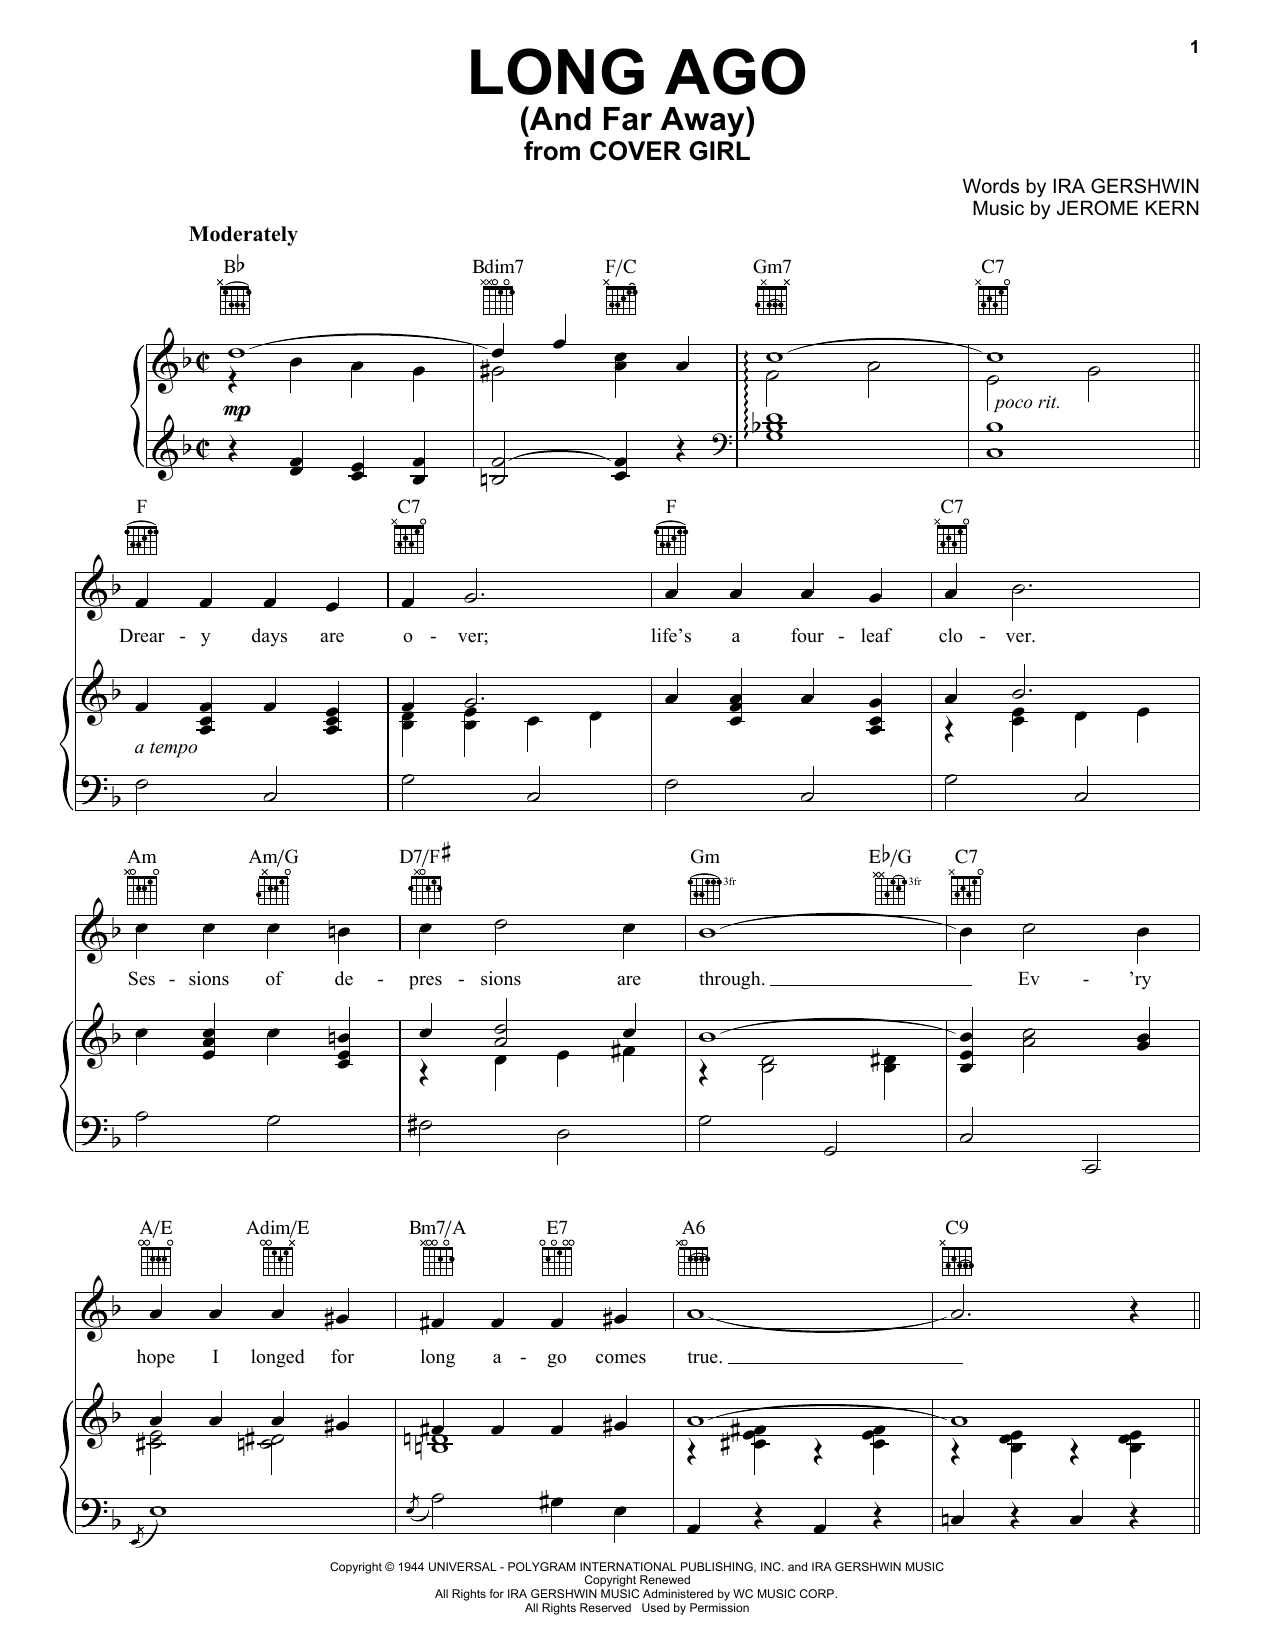 Ira Gershwin Long Ago (And Far Away) Sheet Music Notes & Chords for Viola - Download or Print PDF